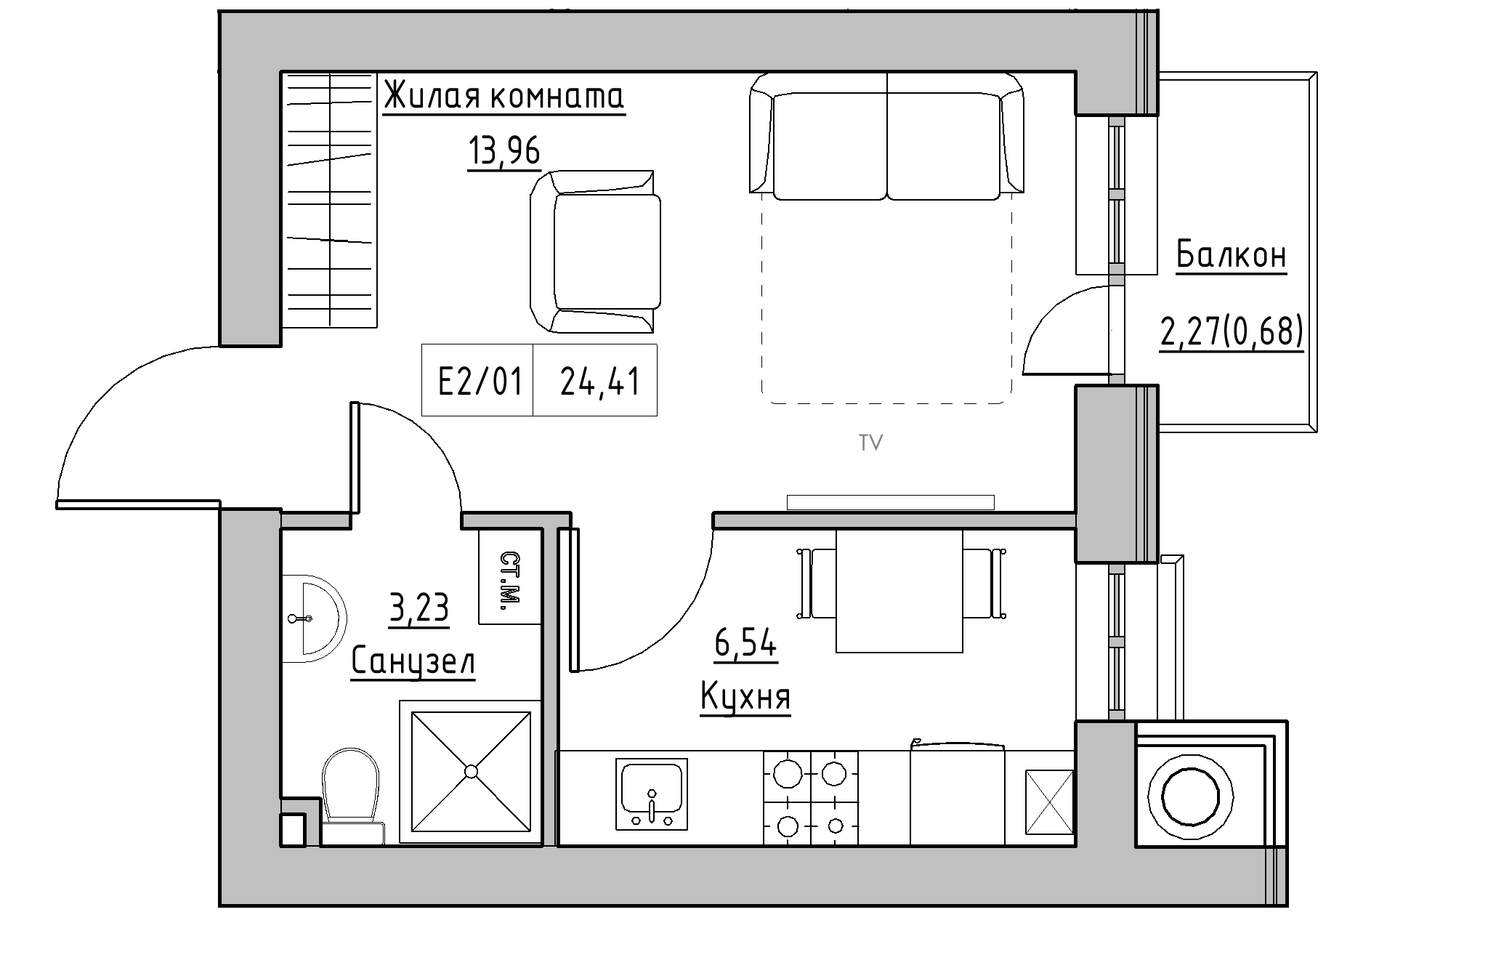 Planning 1-rm flats area 24.41m2, KS-010-02/0009.